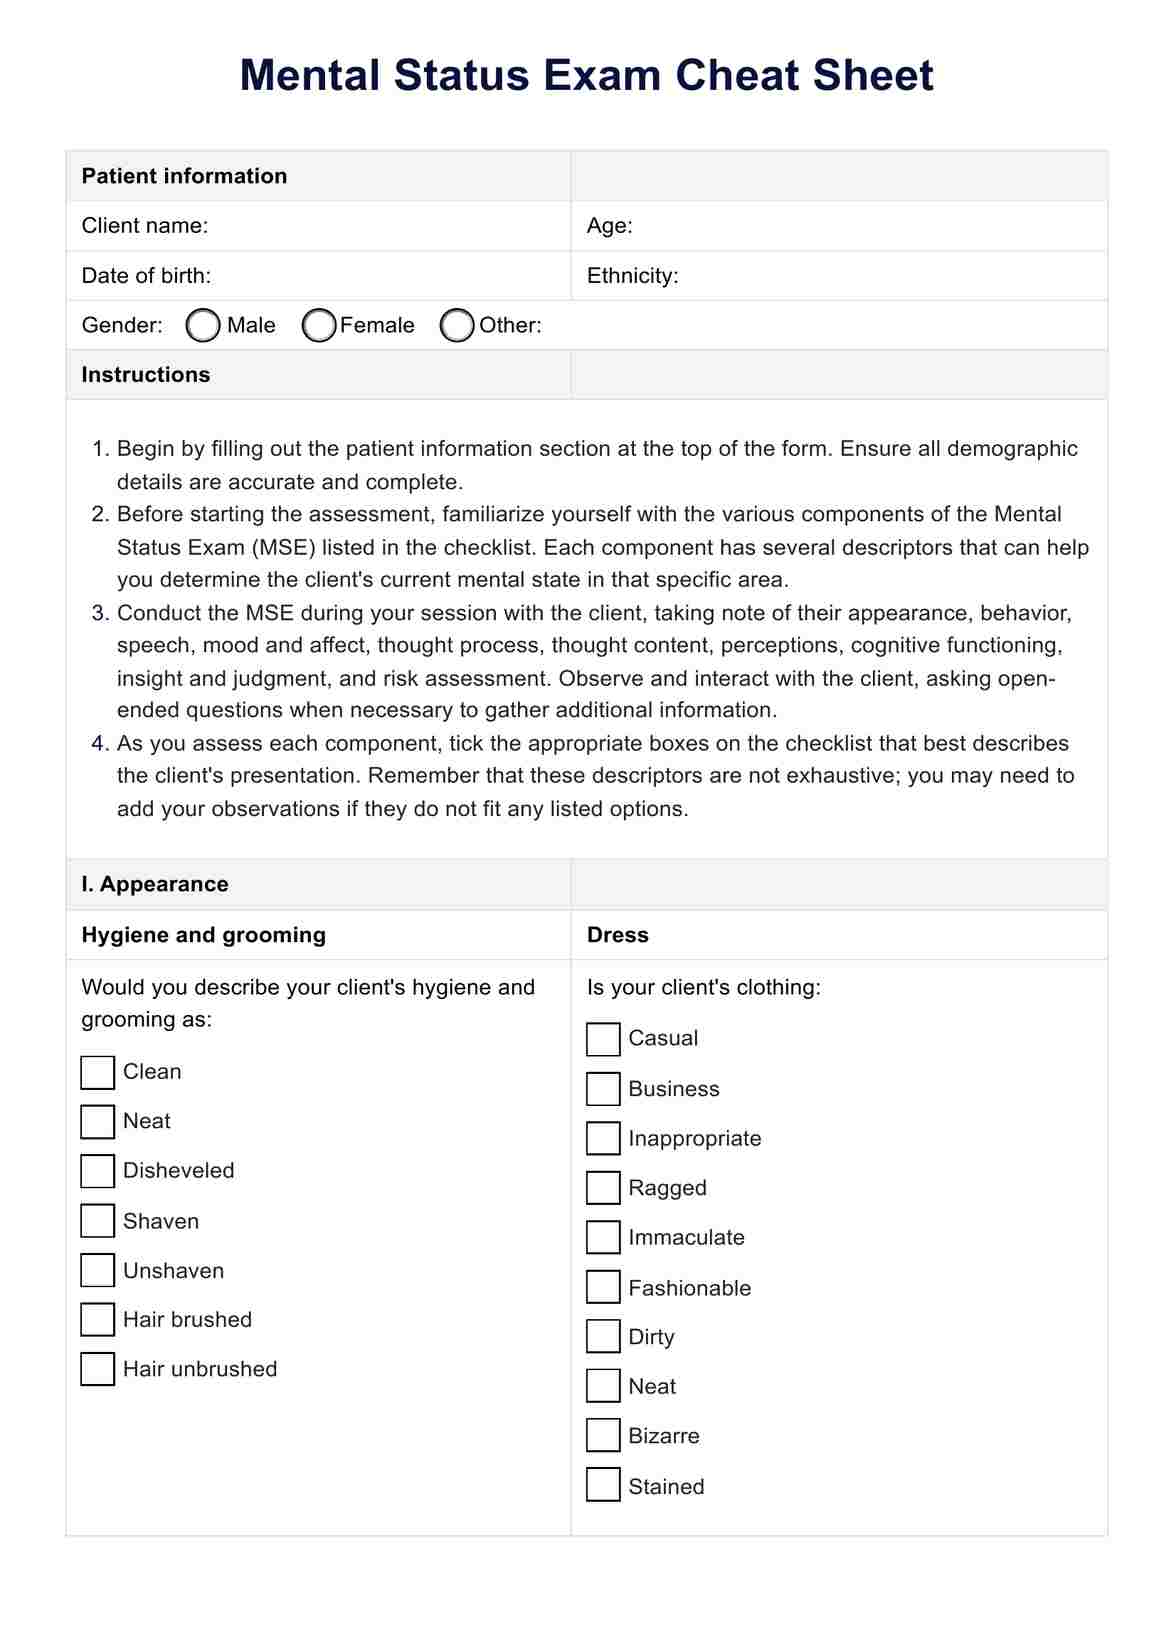 Mental Status Exam Cheat Sheet PDF Example